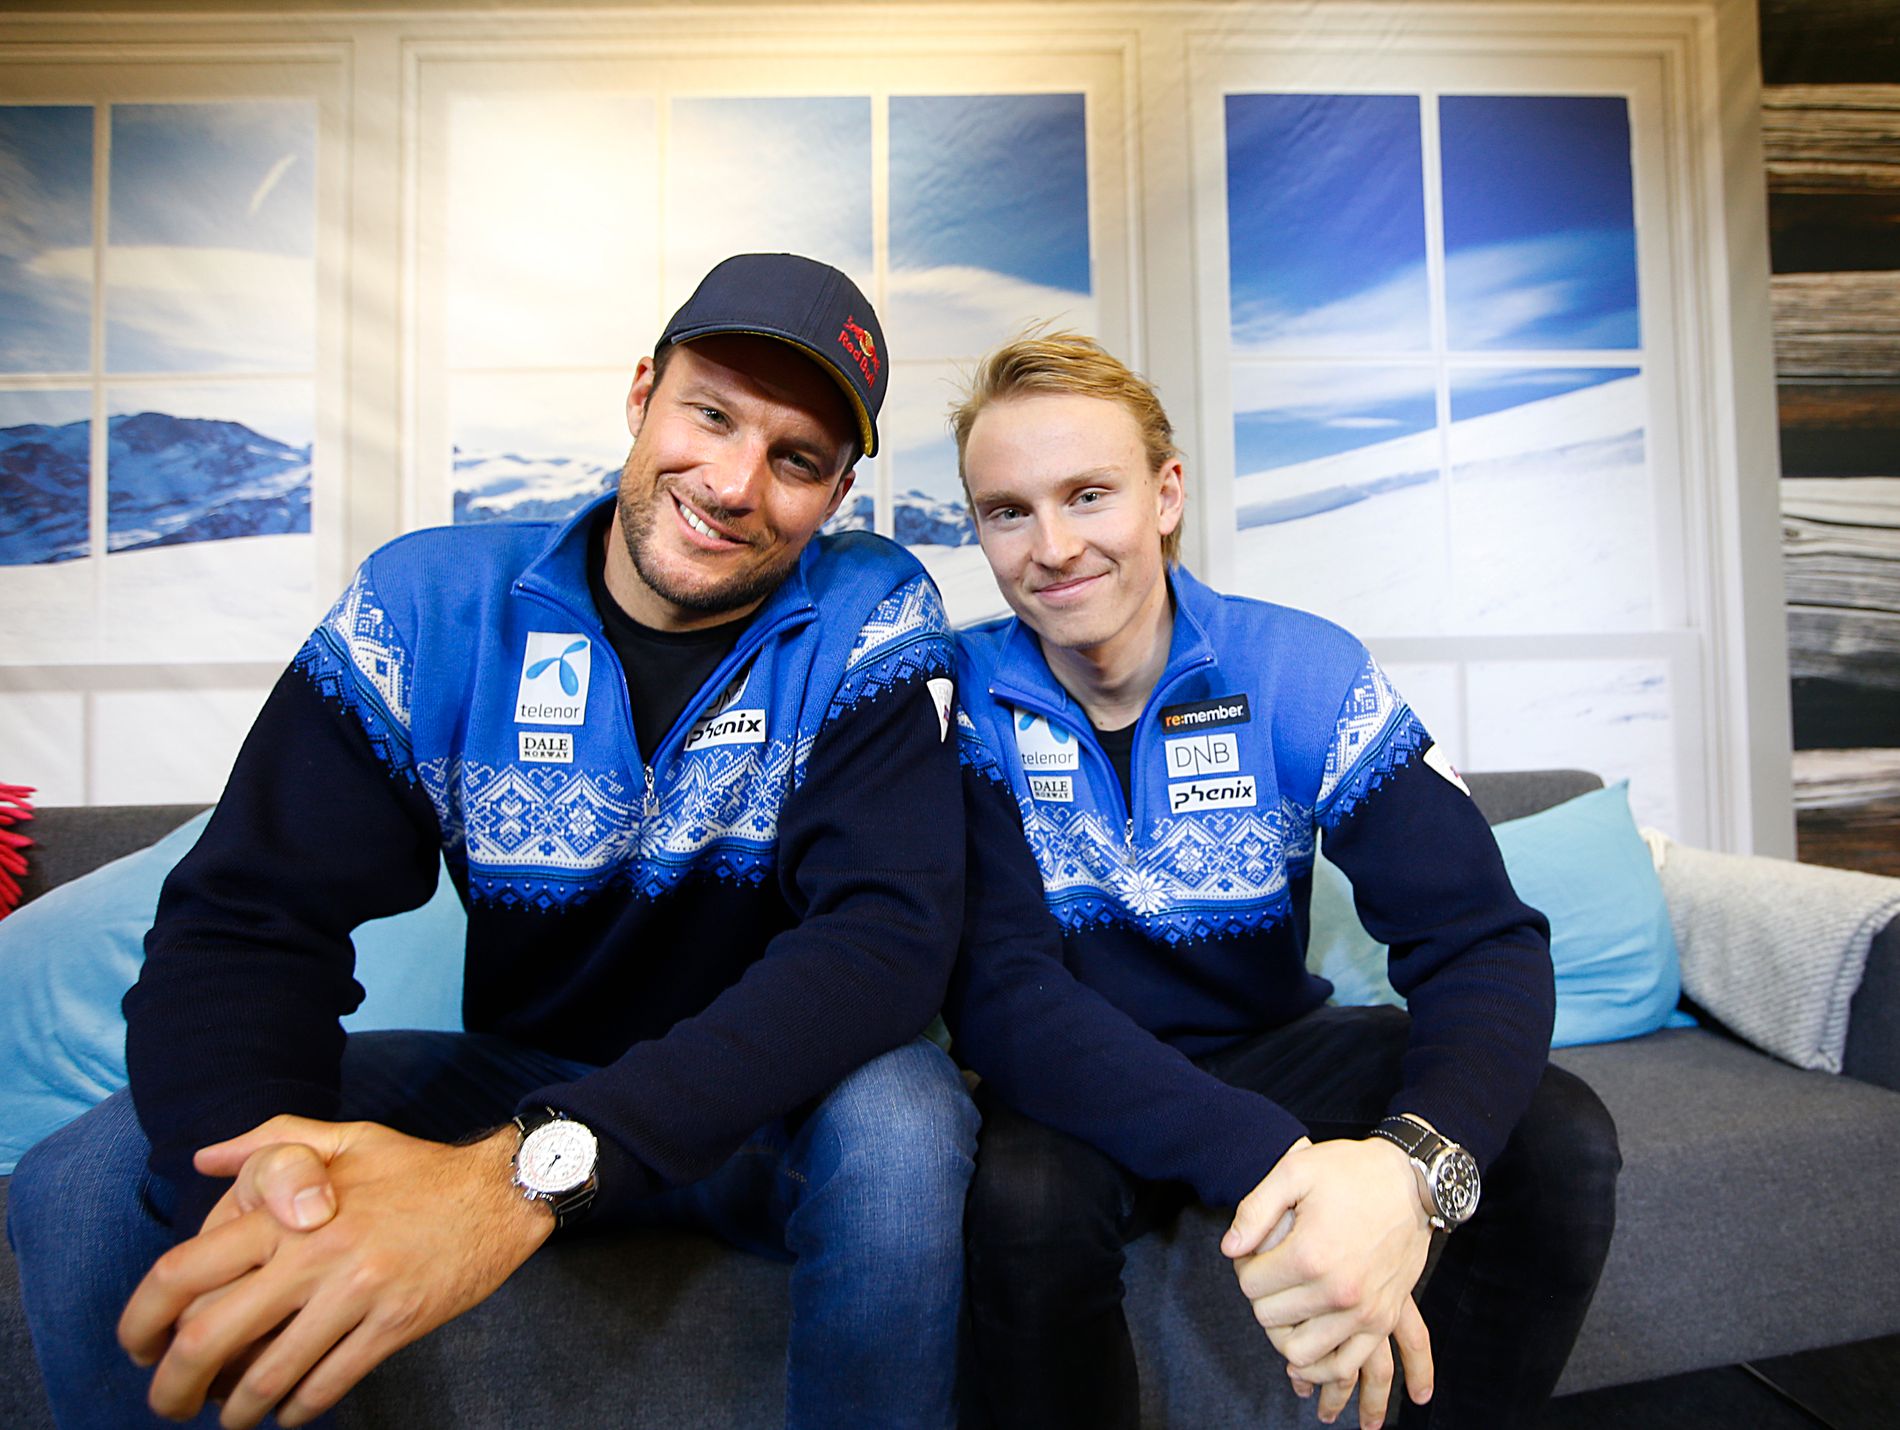 COURT OF AUDITORS: Aksel Lund Svindal and Henrik Kristoffersen depicted on the Norwegian Ski Federation 